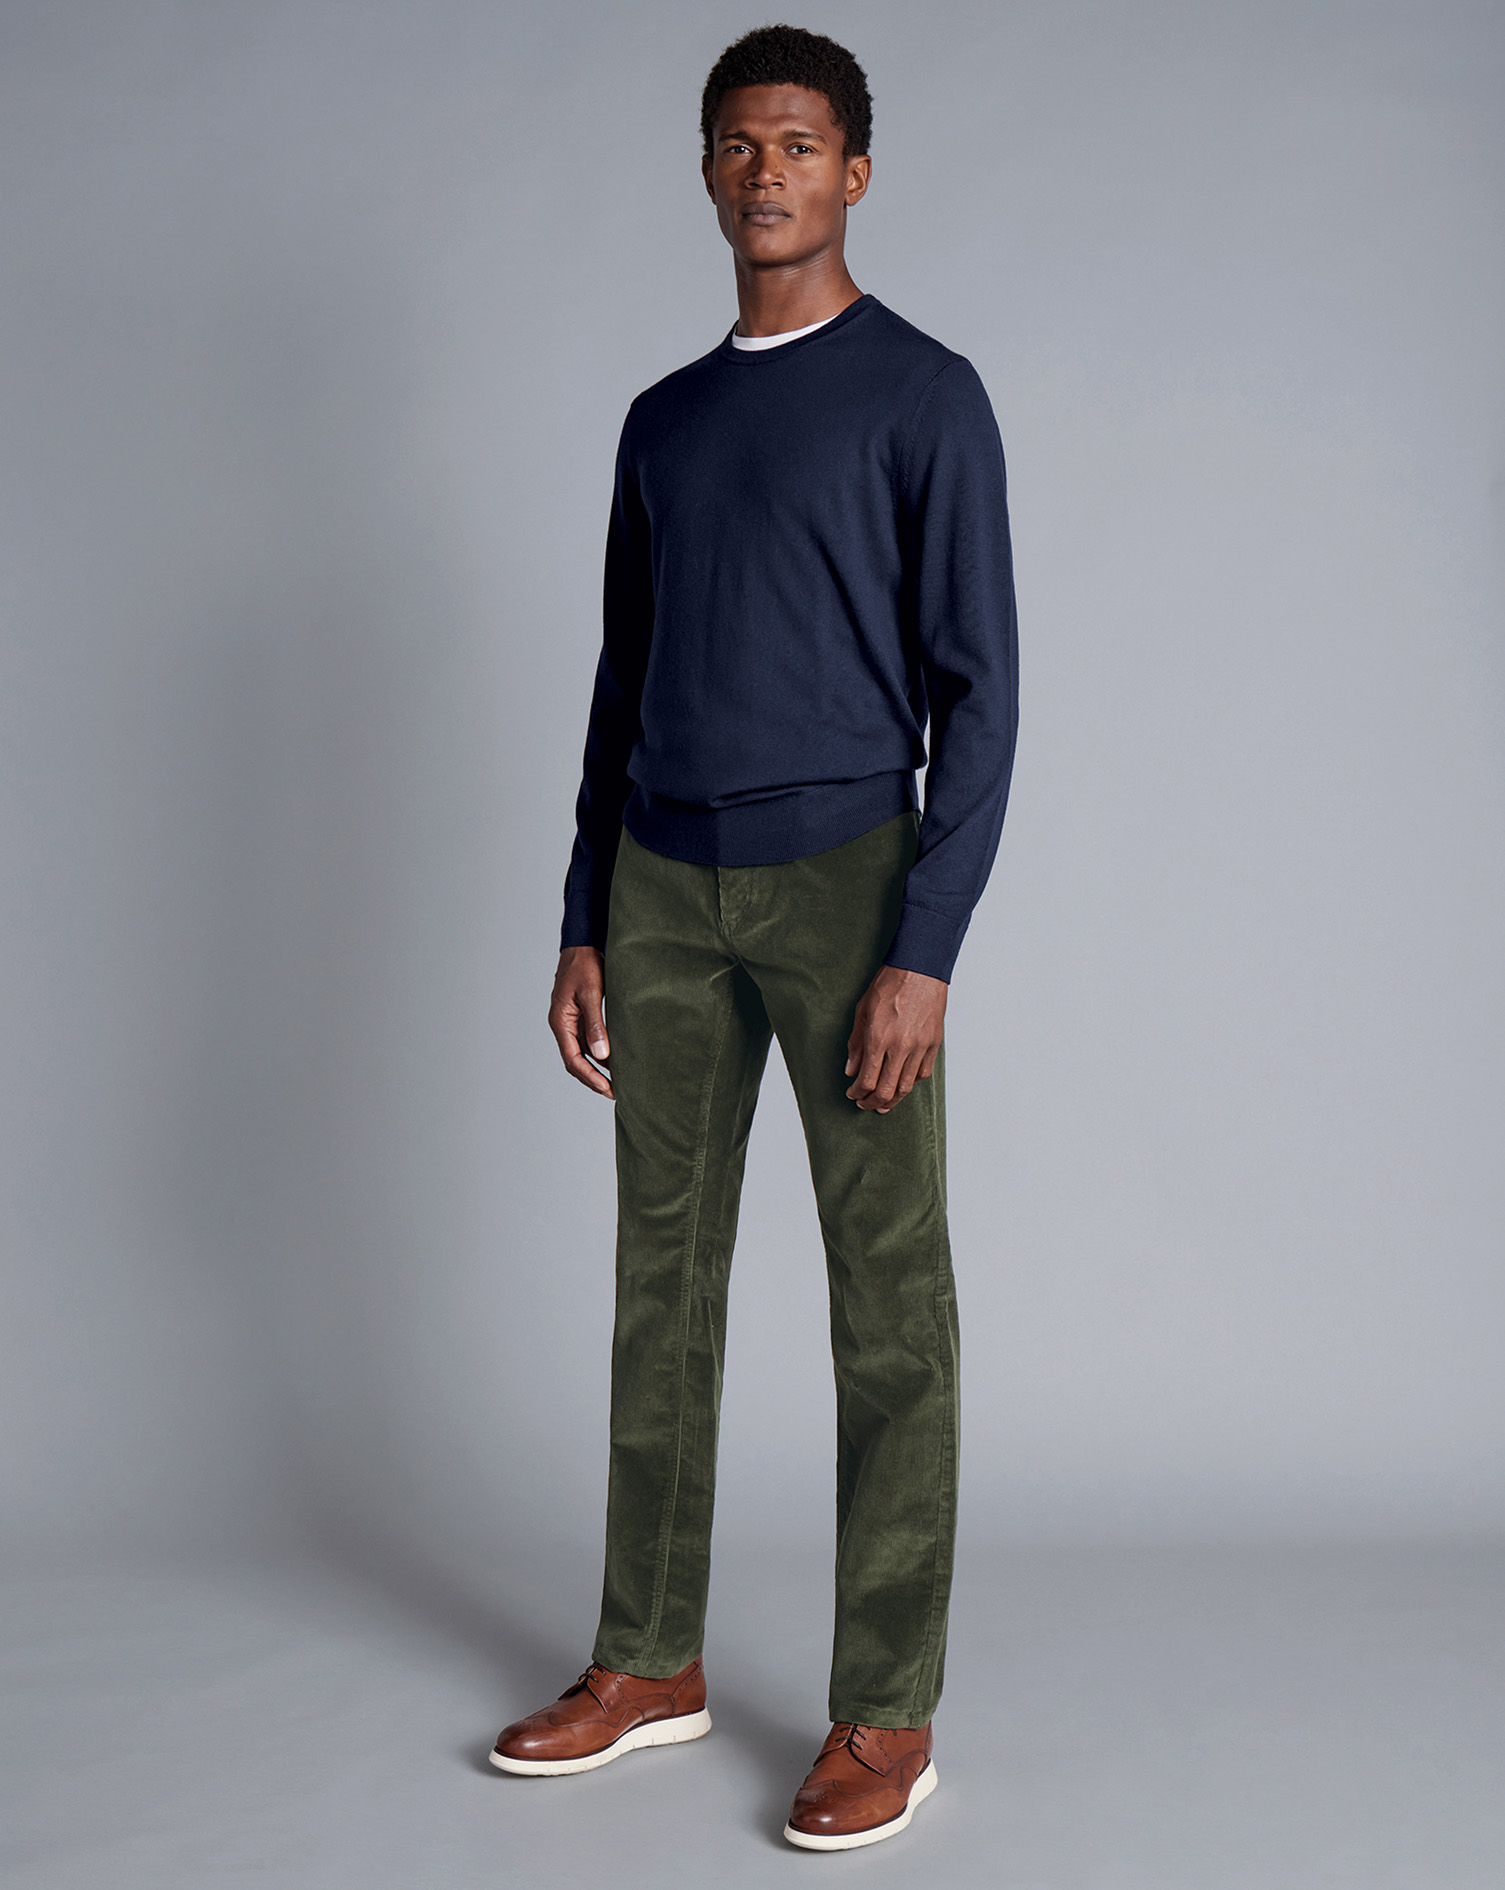 5-Pocket Corduroy Trousers - Olive Green Size W38 L34
